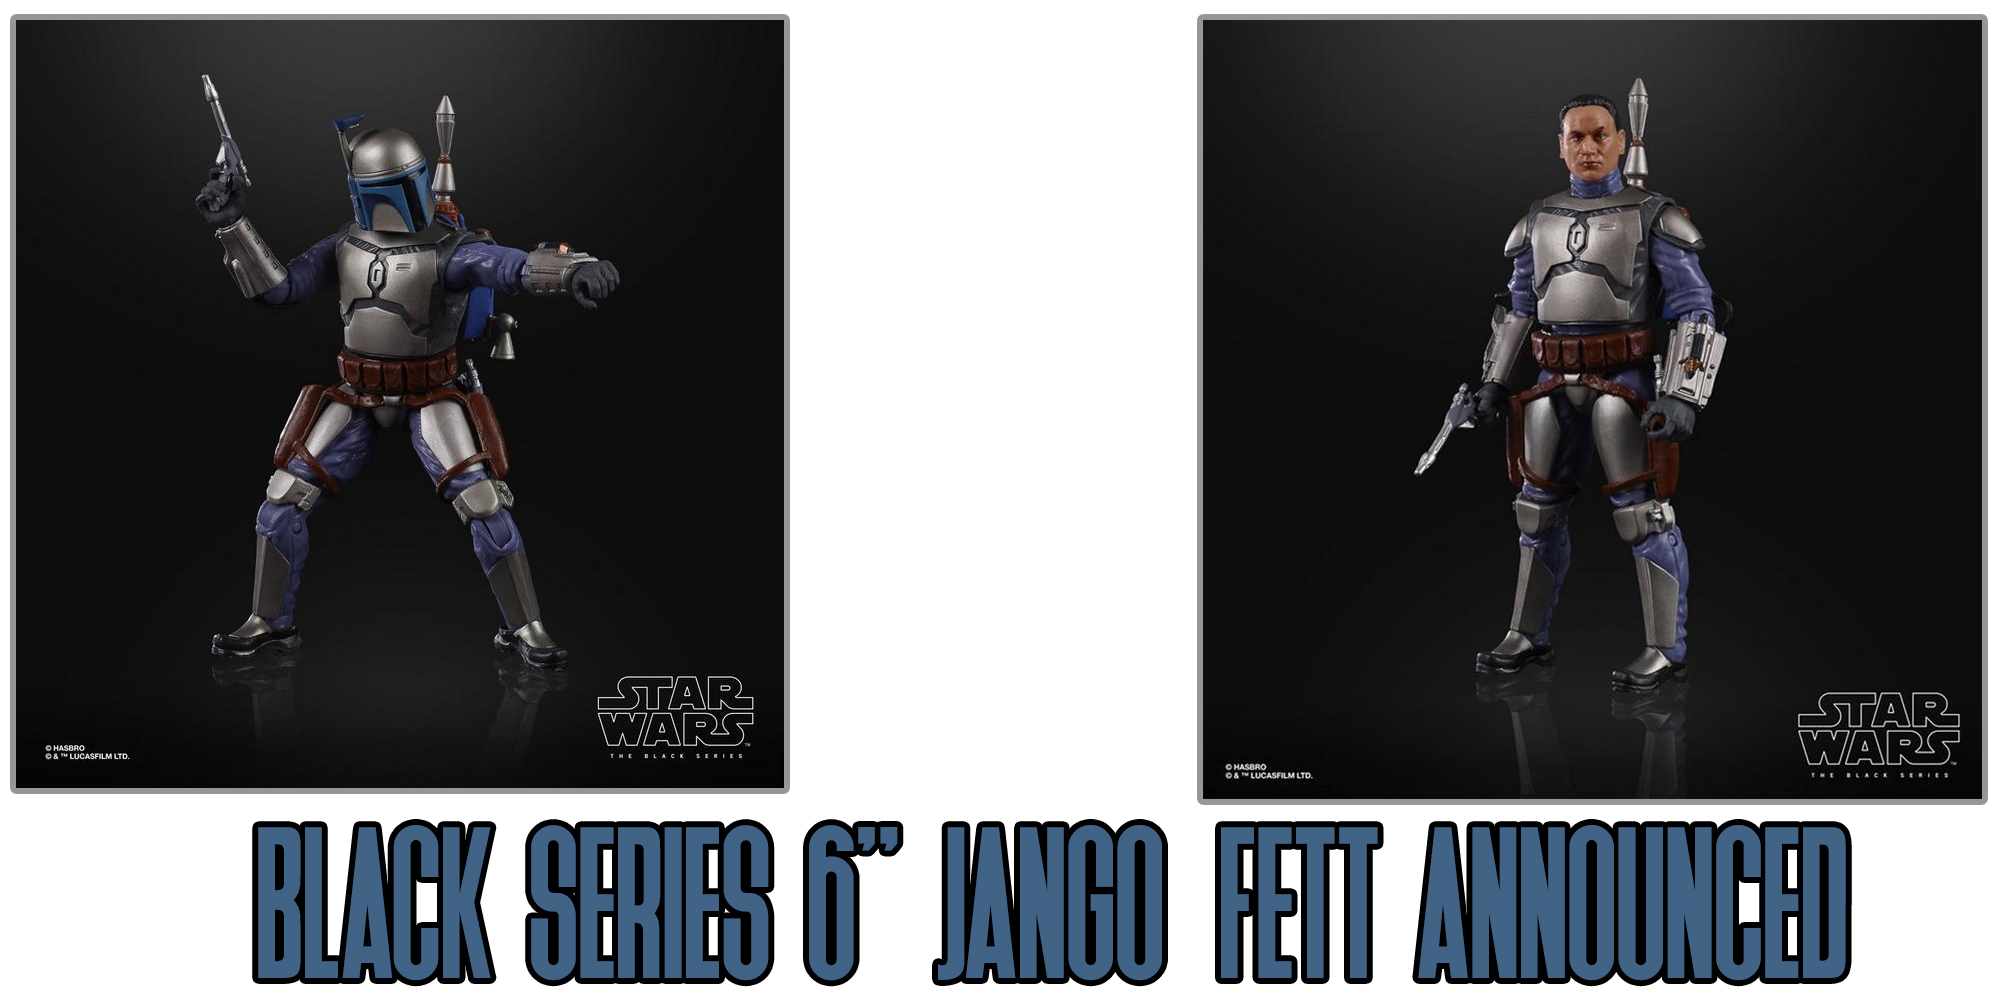 Black Series Jango Fett Announced